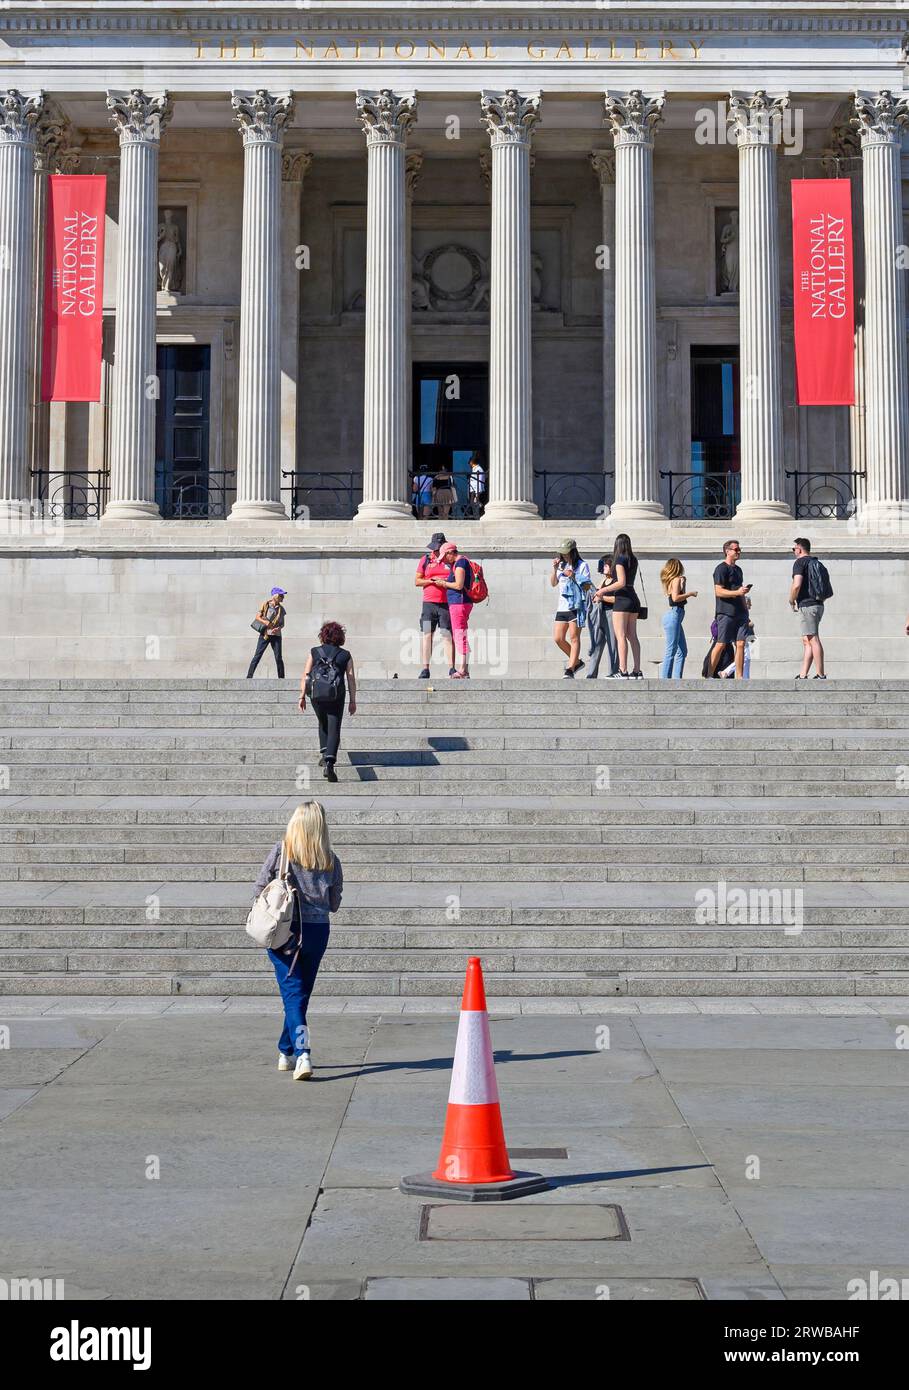 London, England, UK. The National Gallery in Trafalgar Square Stock Photo